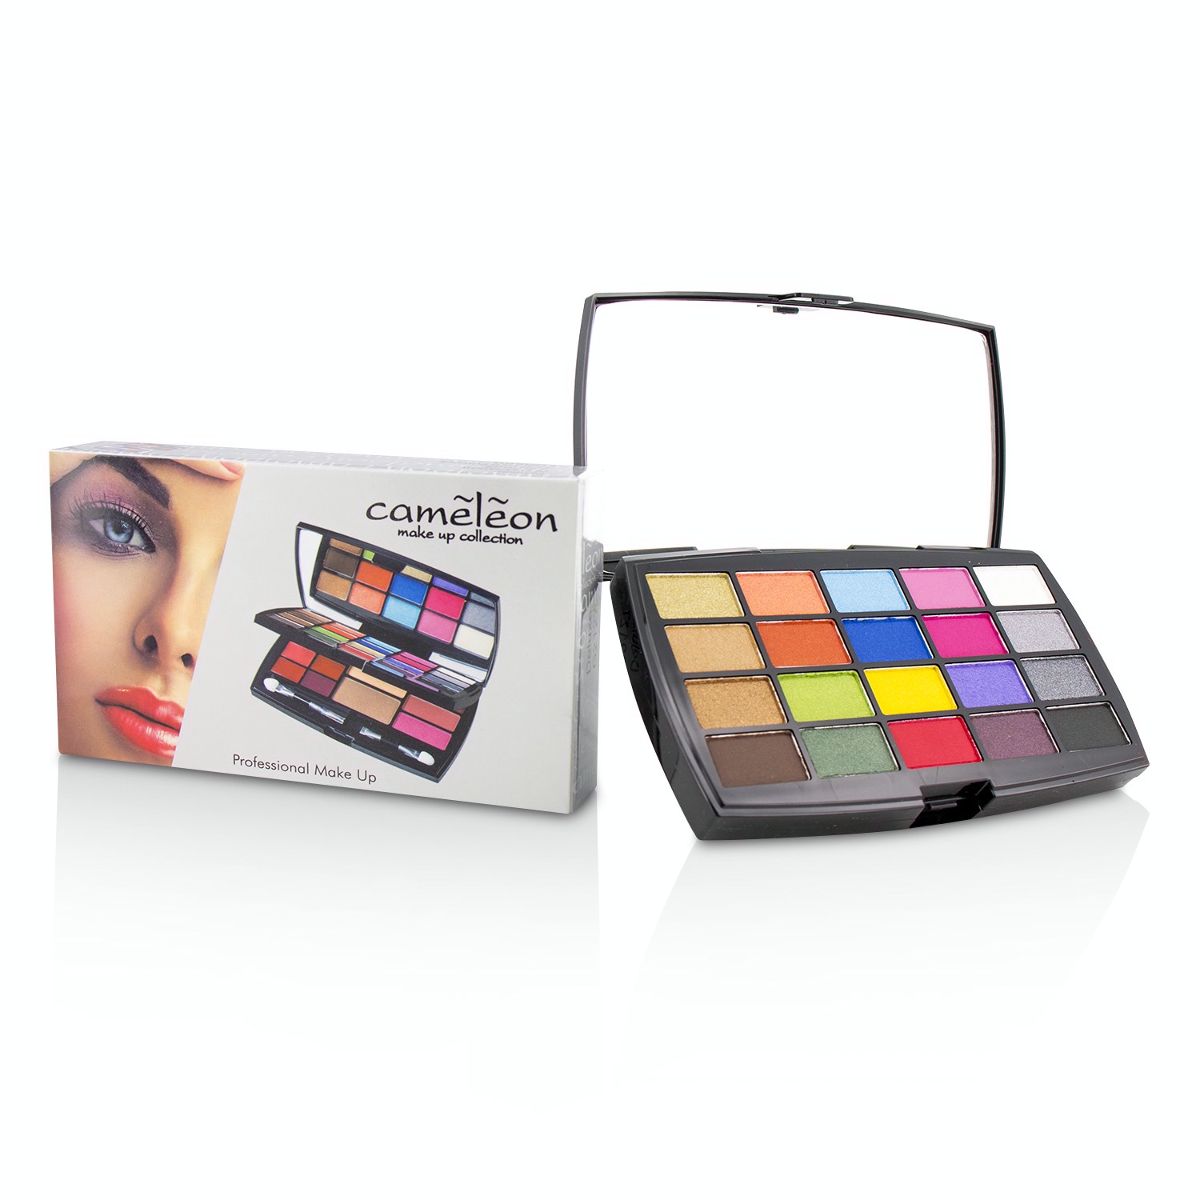 MakeUp Kit Deluxe G2127 (20x Eyeshadow 3x Blusher 2x Pressed Powder 6x Lipgloss 2x Applicator) Cameleon Image